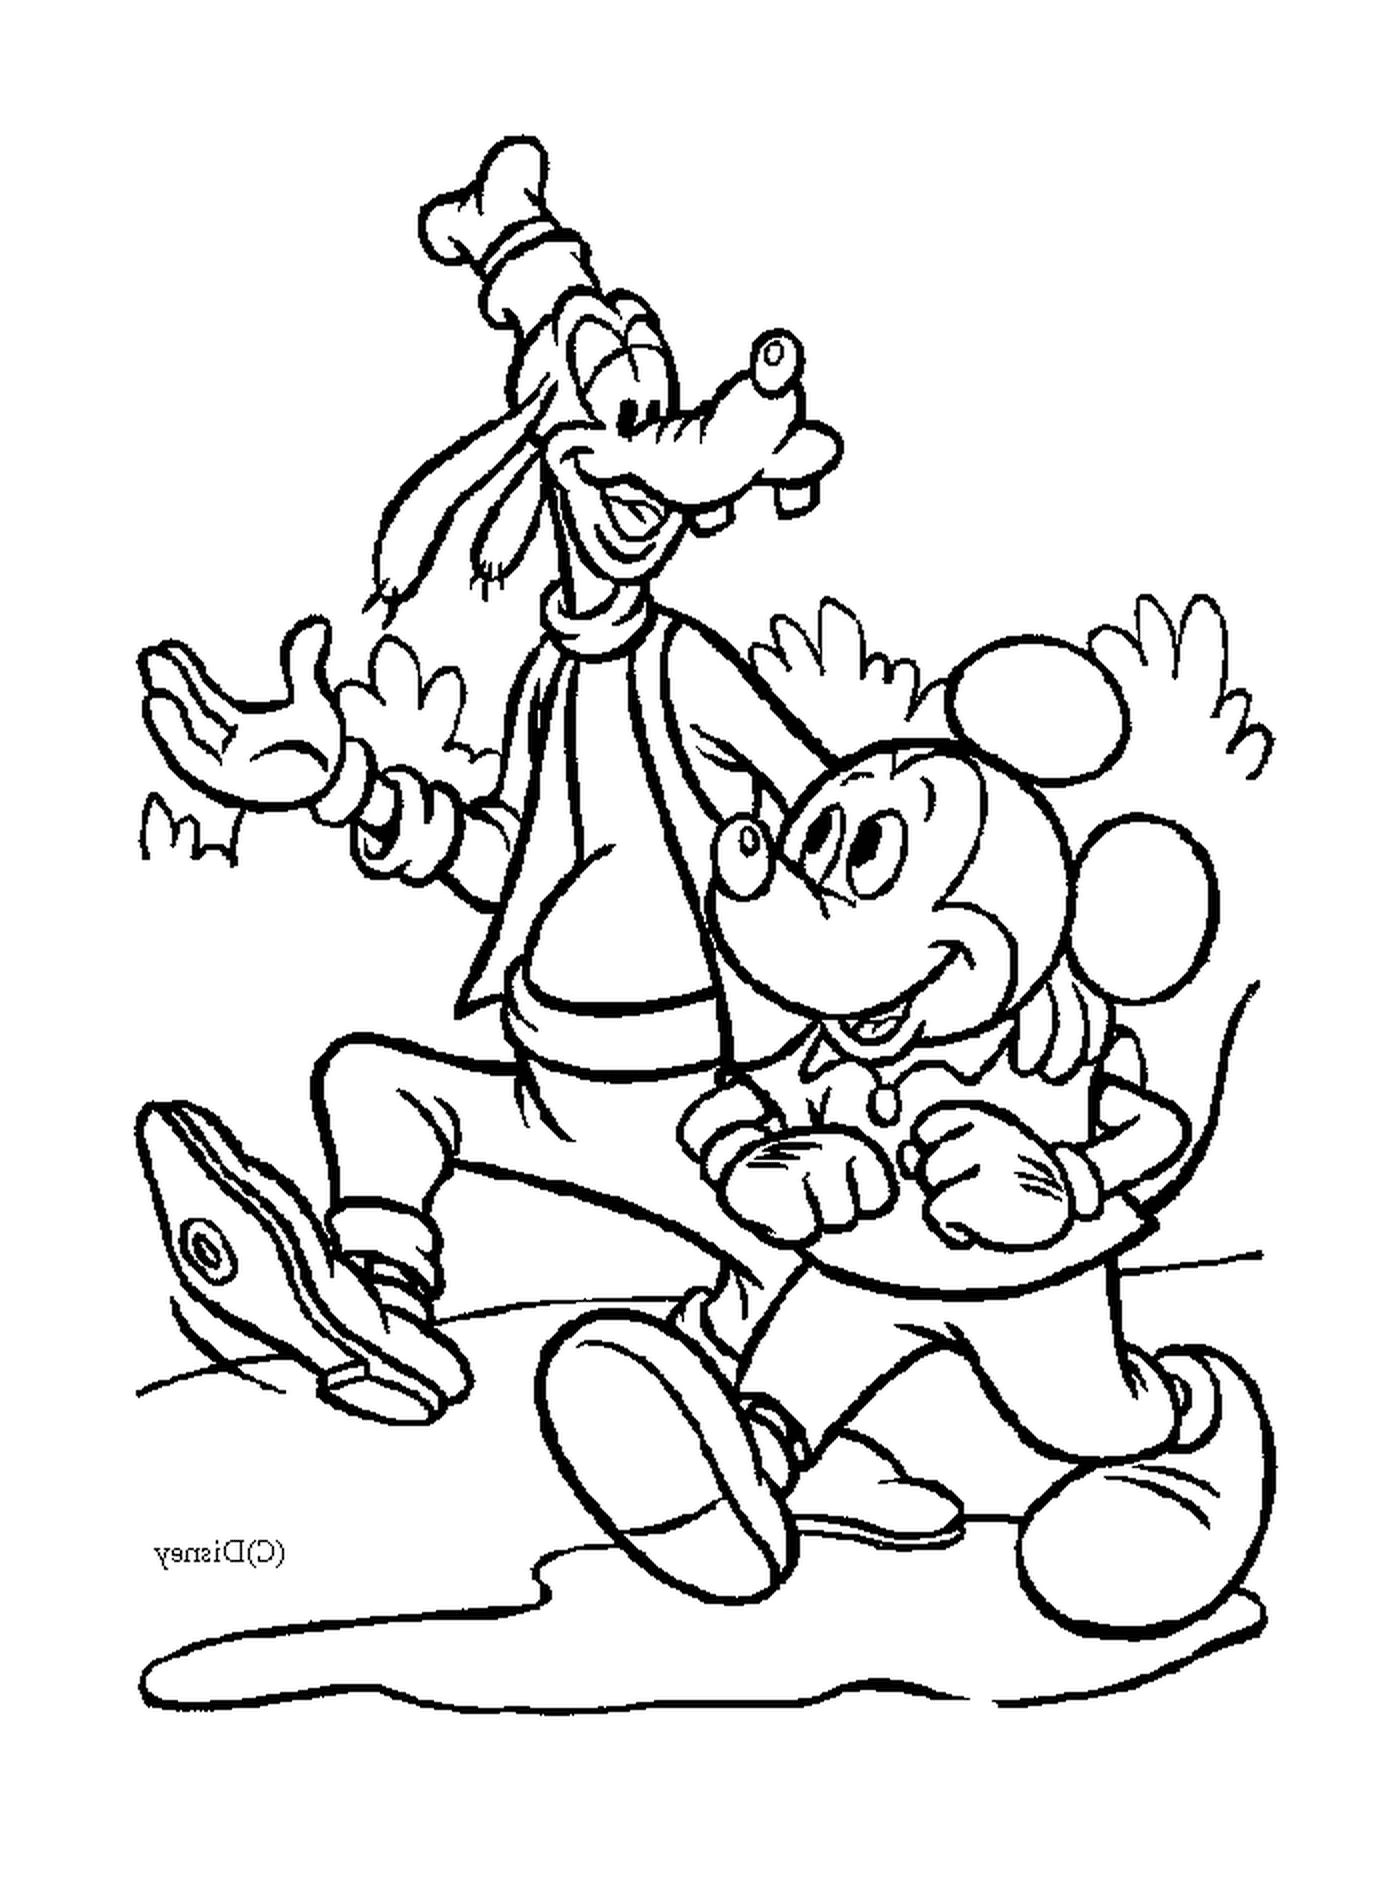  Mickey e seu amigo Dingo: Mickey e Dingo 